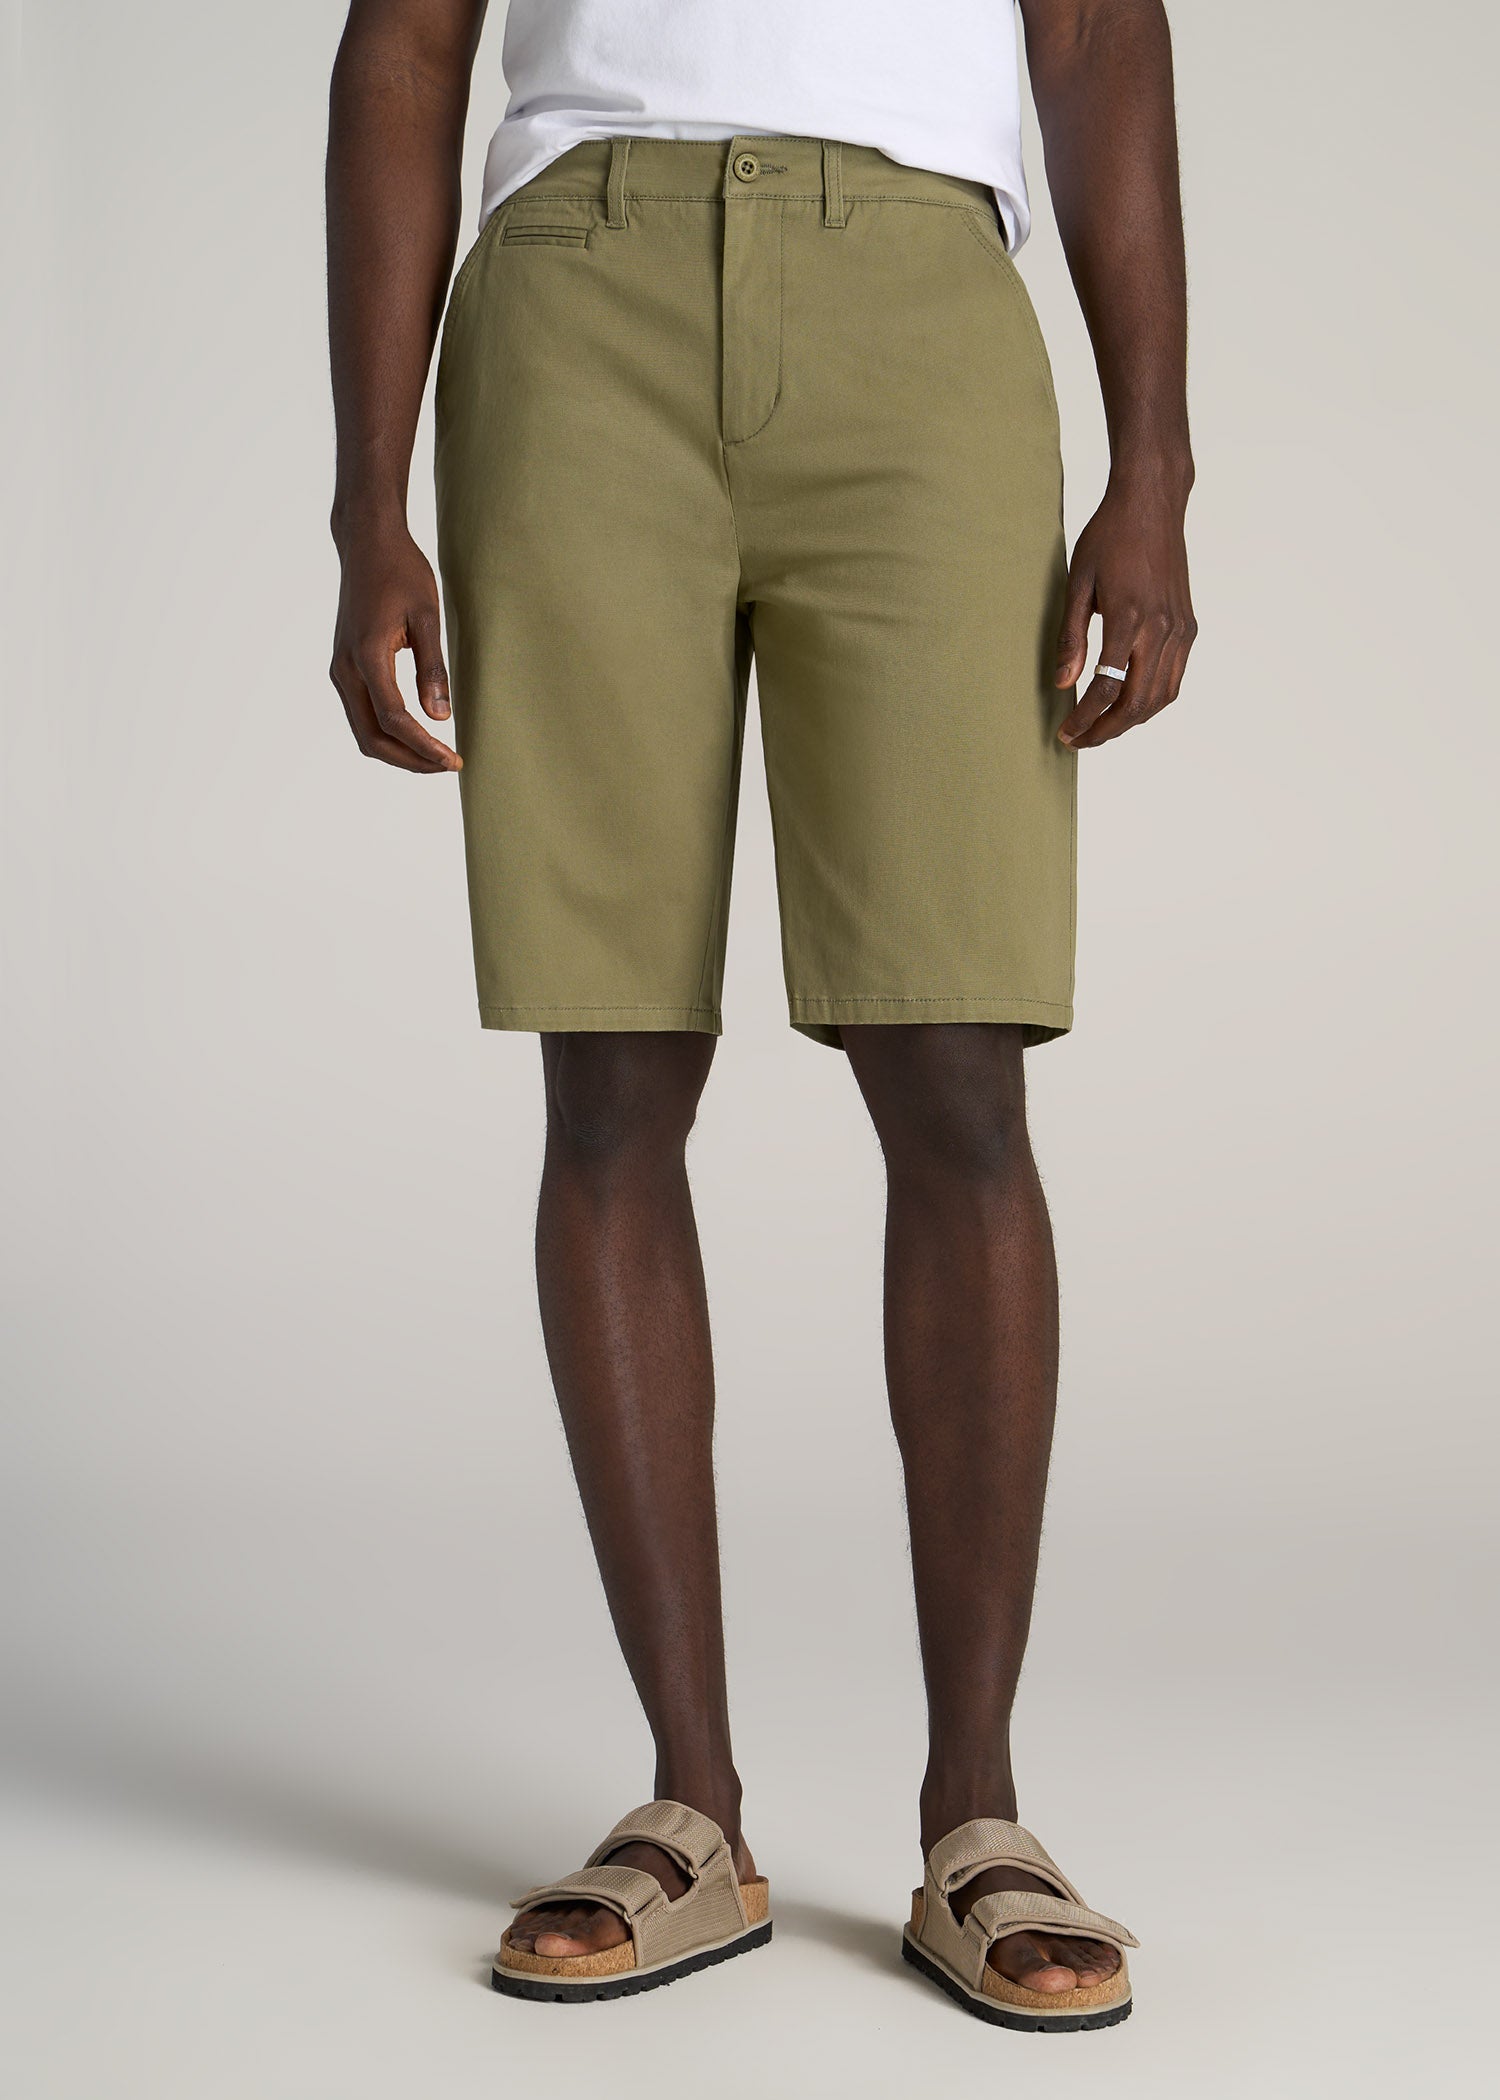    American-Tall-Men-Chino-Shorts-Fatigue-Green-front